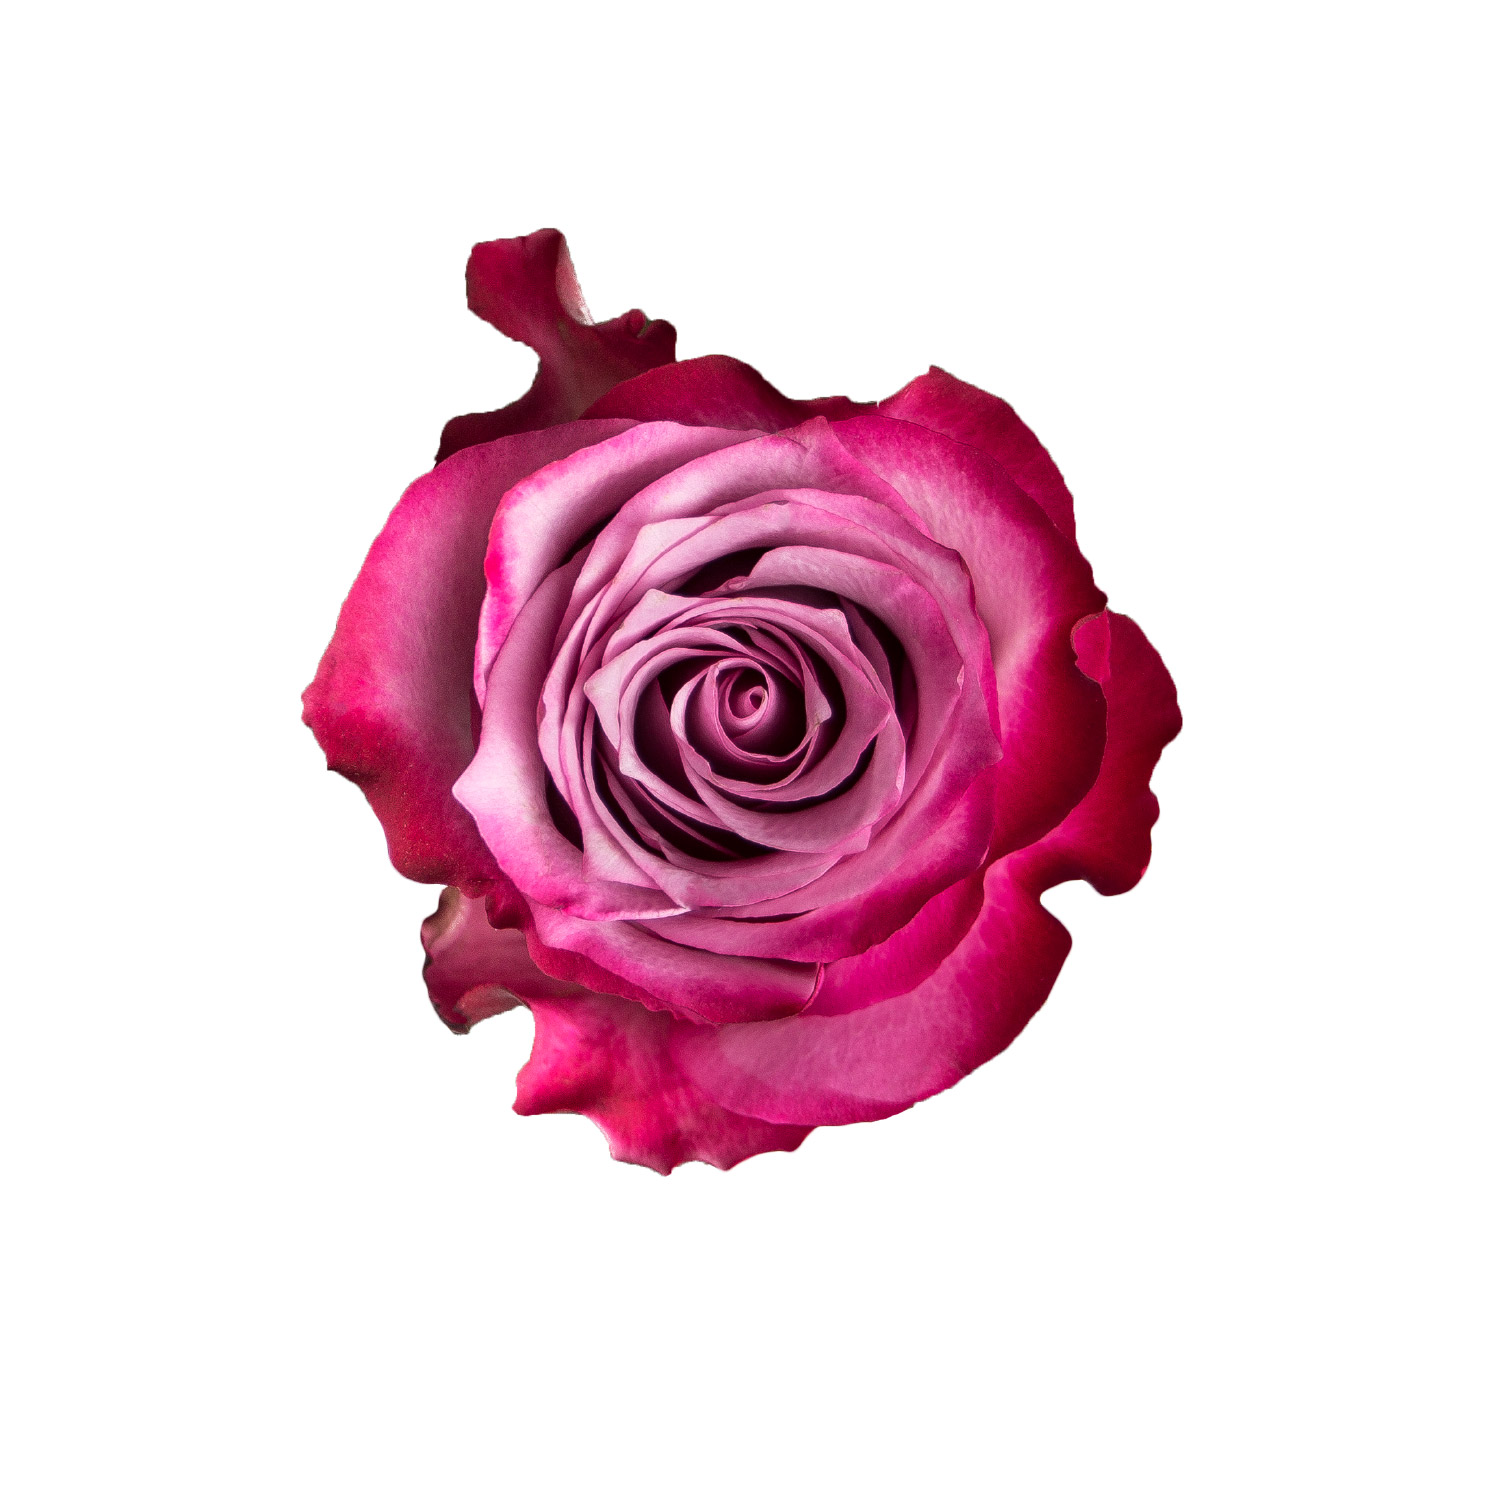 Paper Light Shade Motiv "Rose" - The Special One